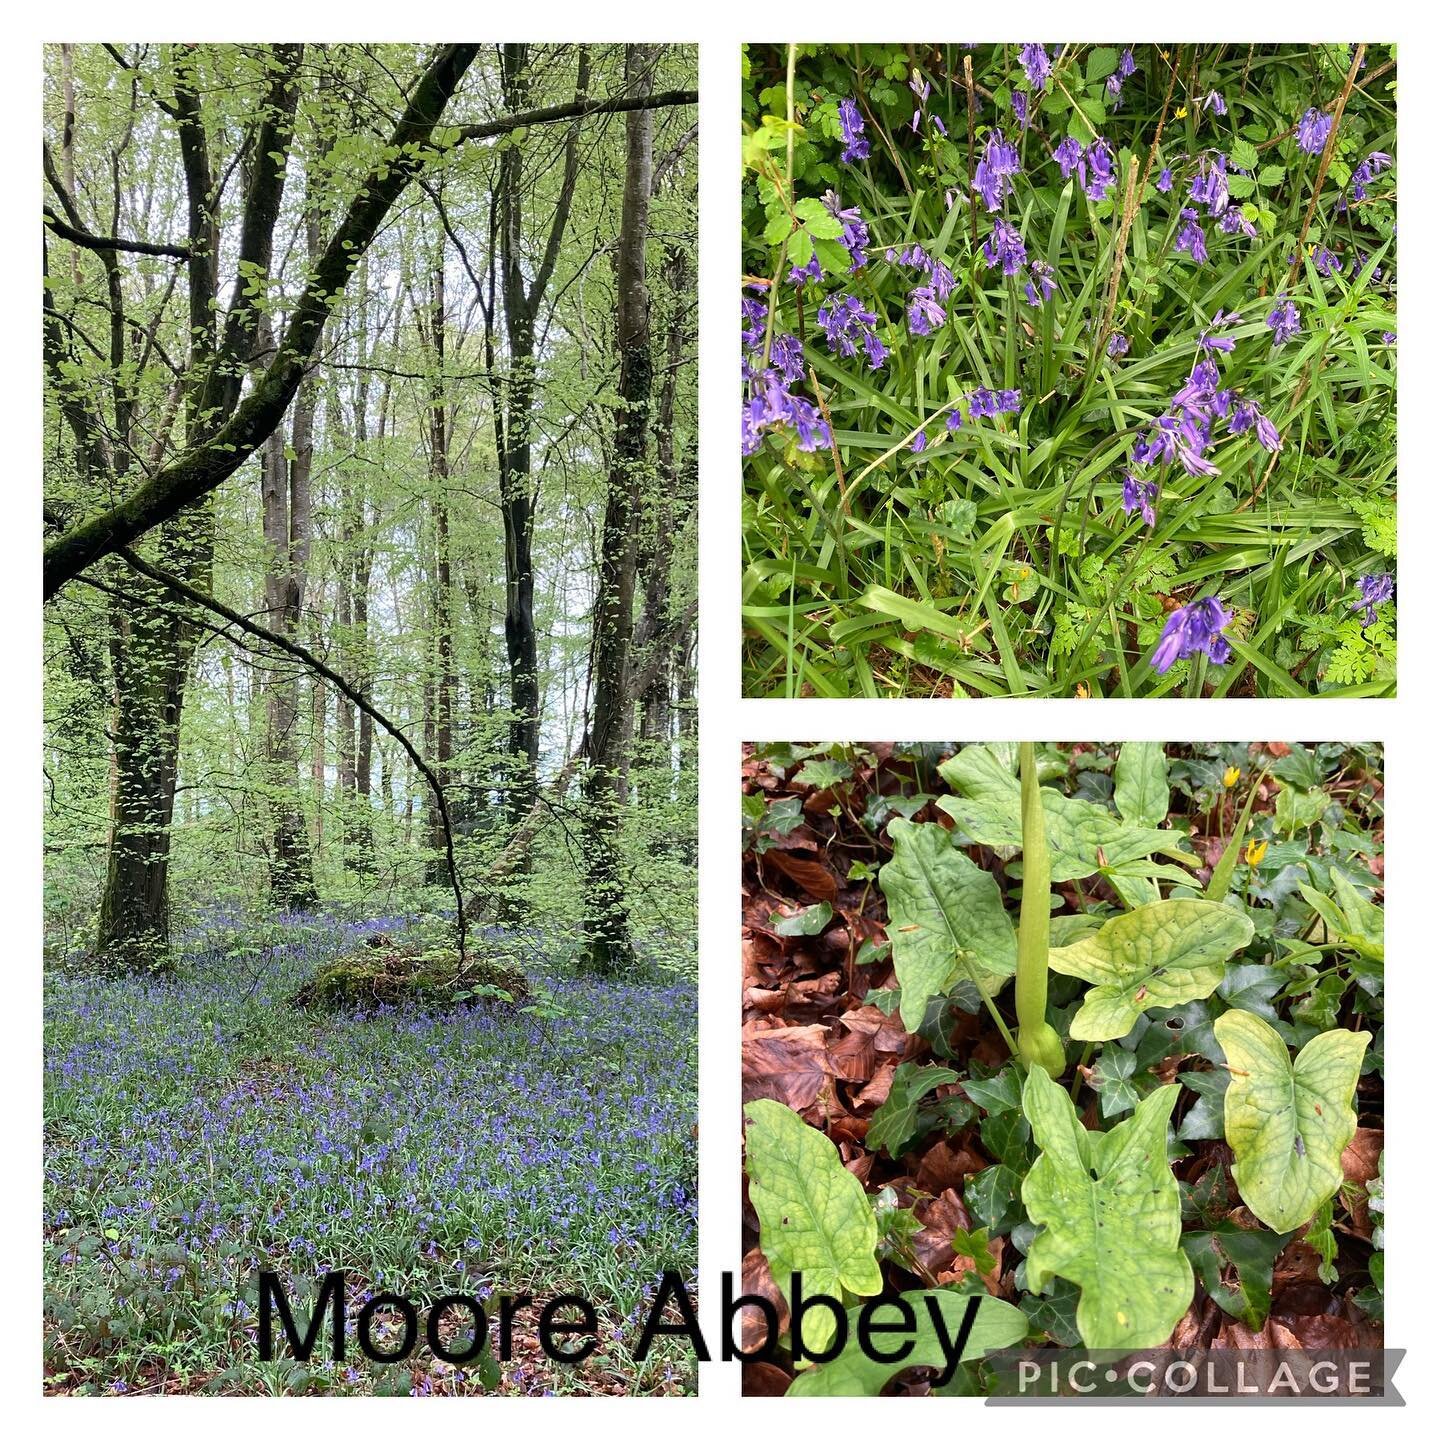 Bluebell walk in Moore Abbey, County Kildare